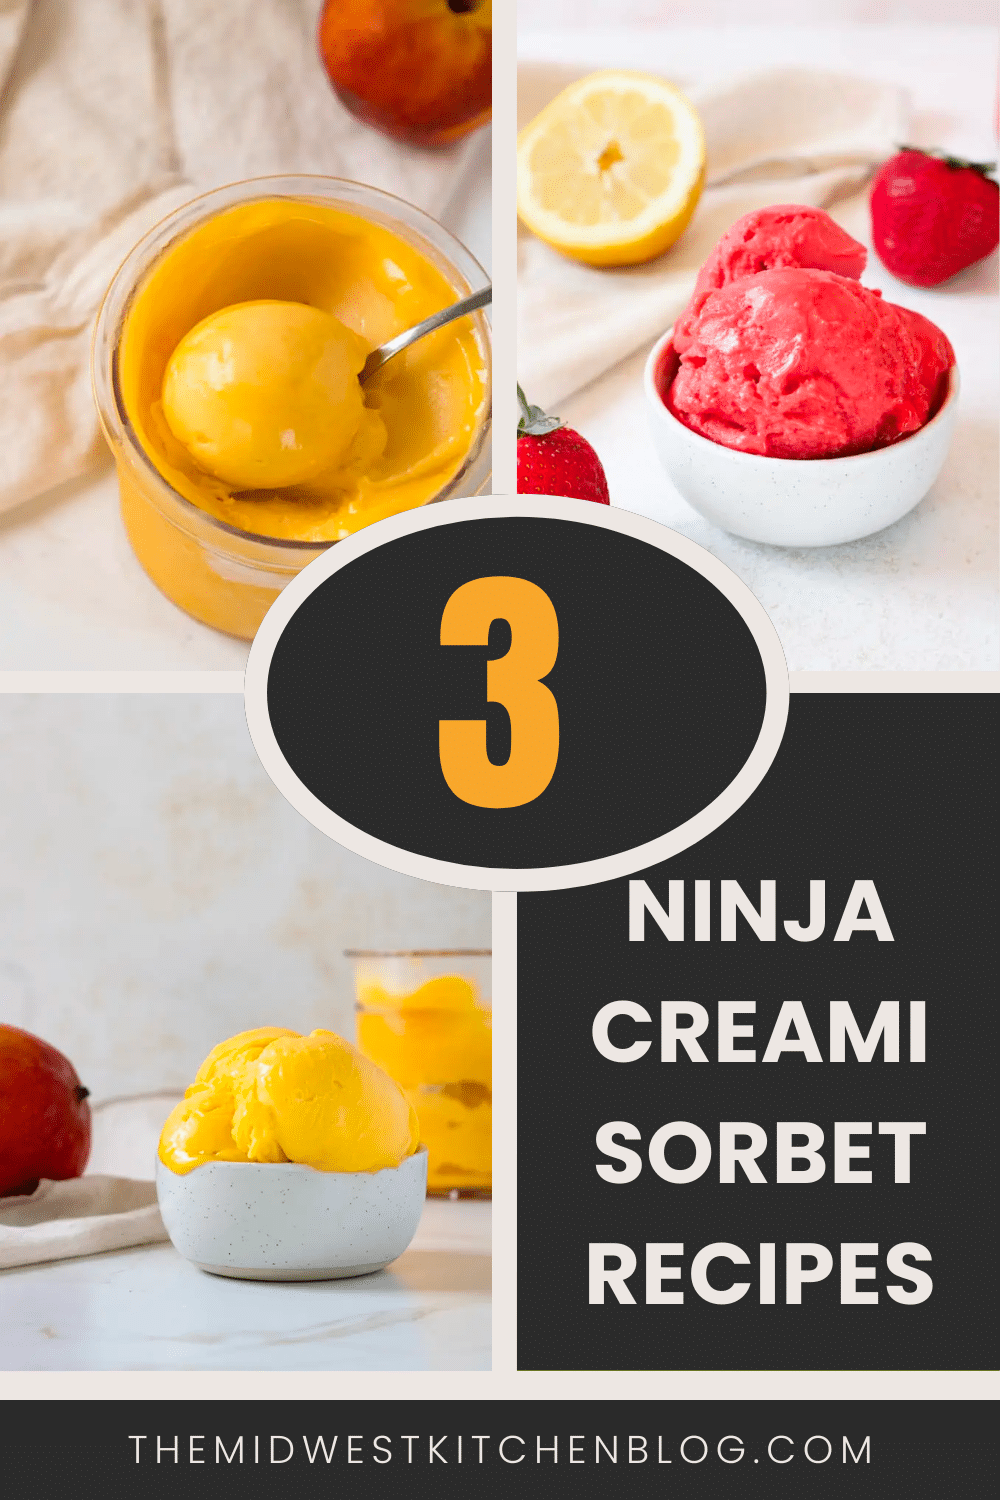 Ninja Creami Sorbet Recipes Infographic.